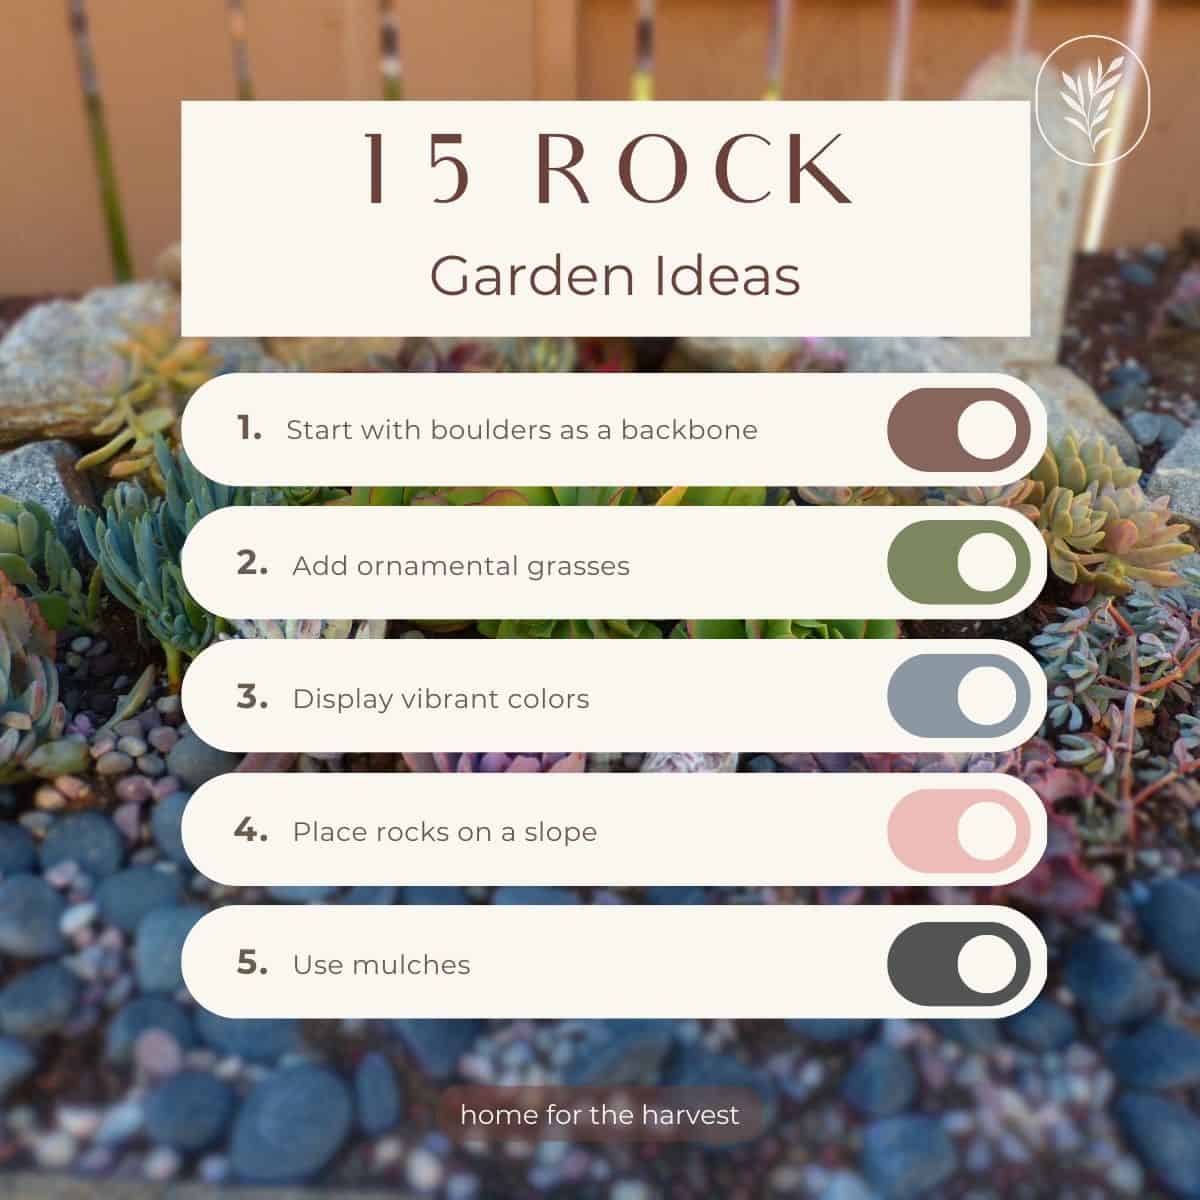 15 rock garden ideas - instagram via @home4theharvest